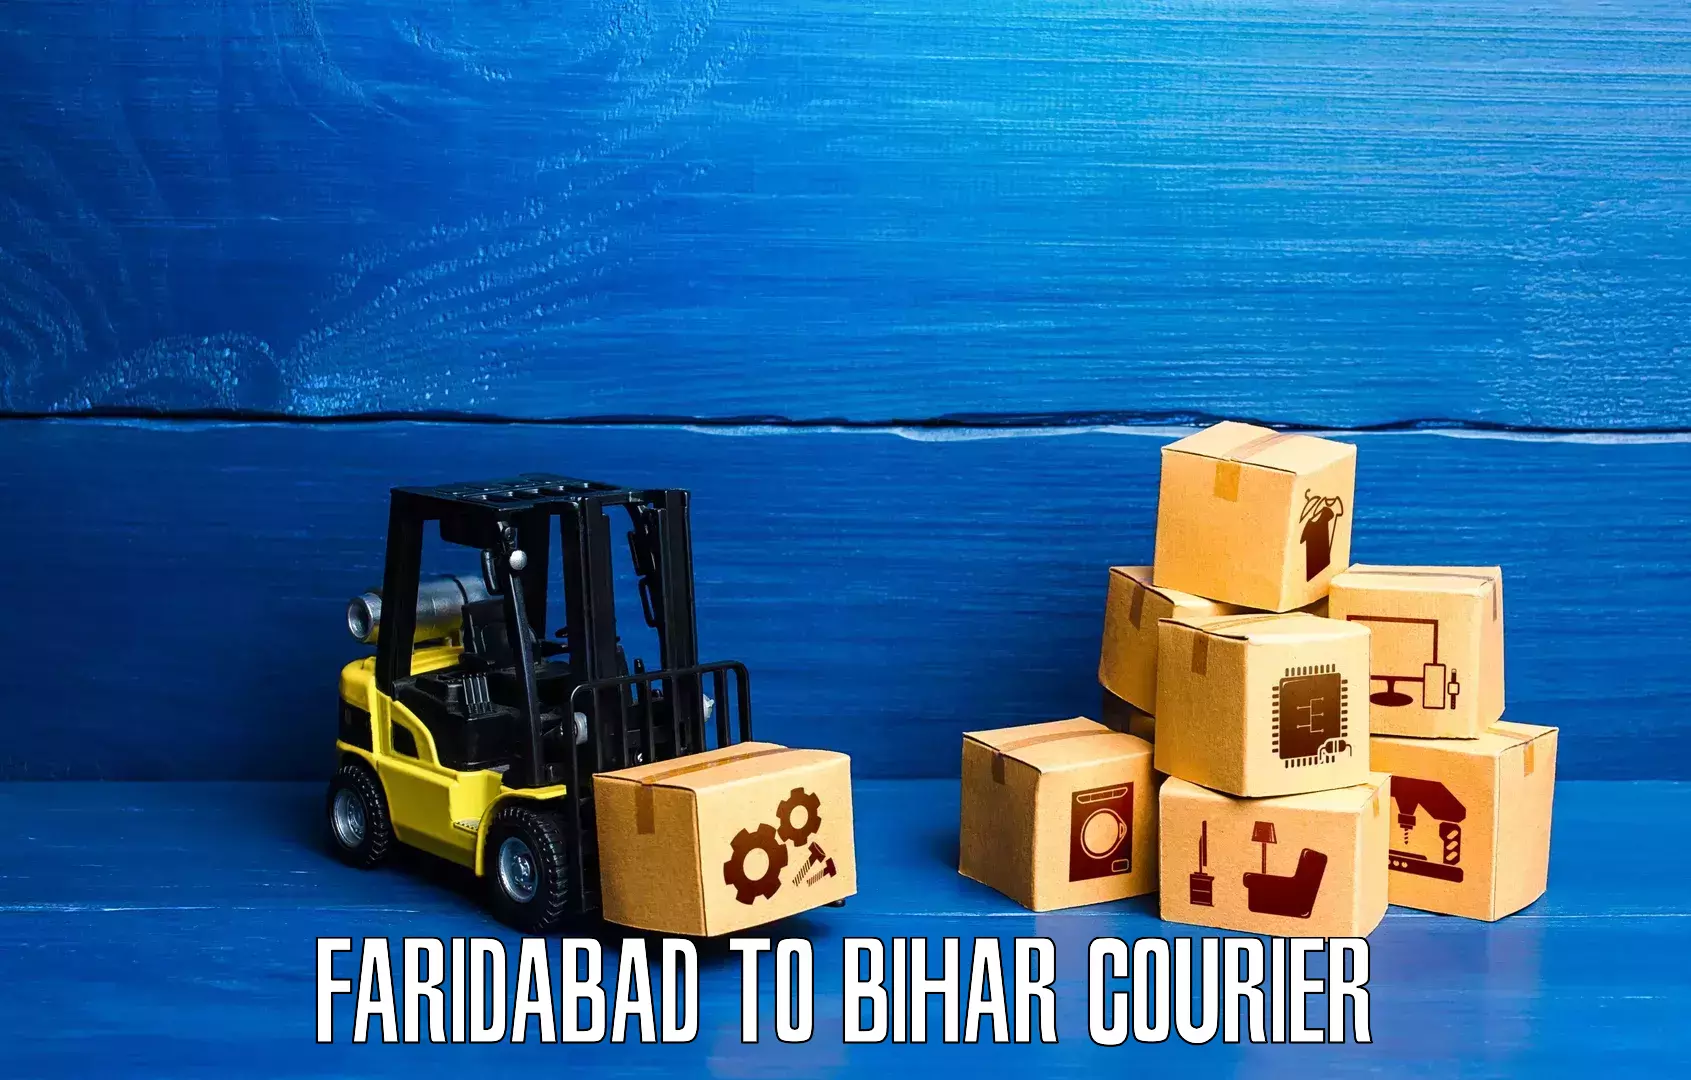 Courier service innovation Faridabad to Aurangabad Bihar